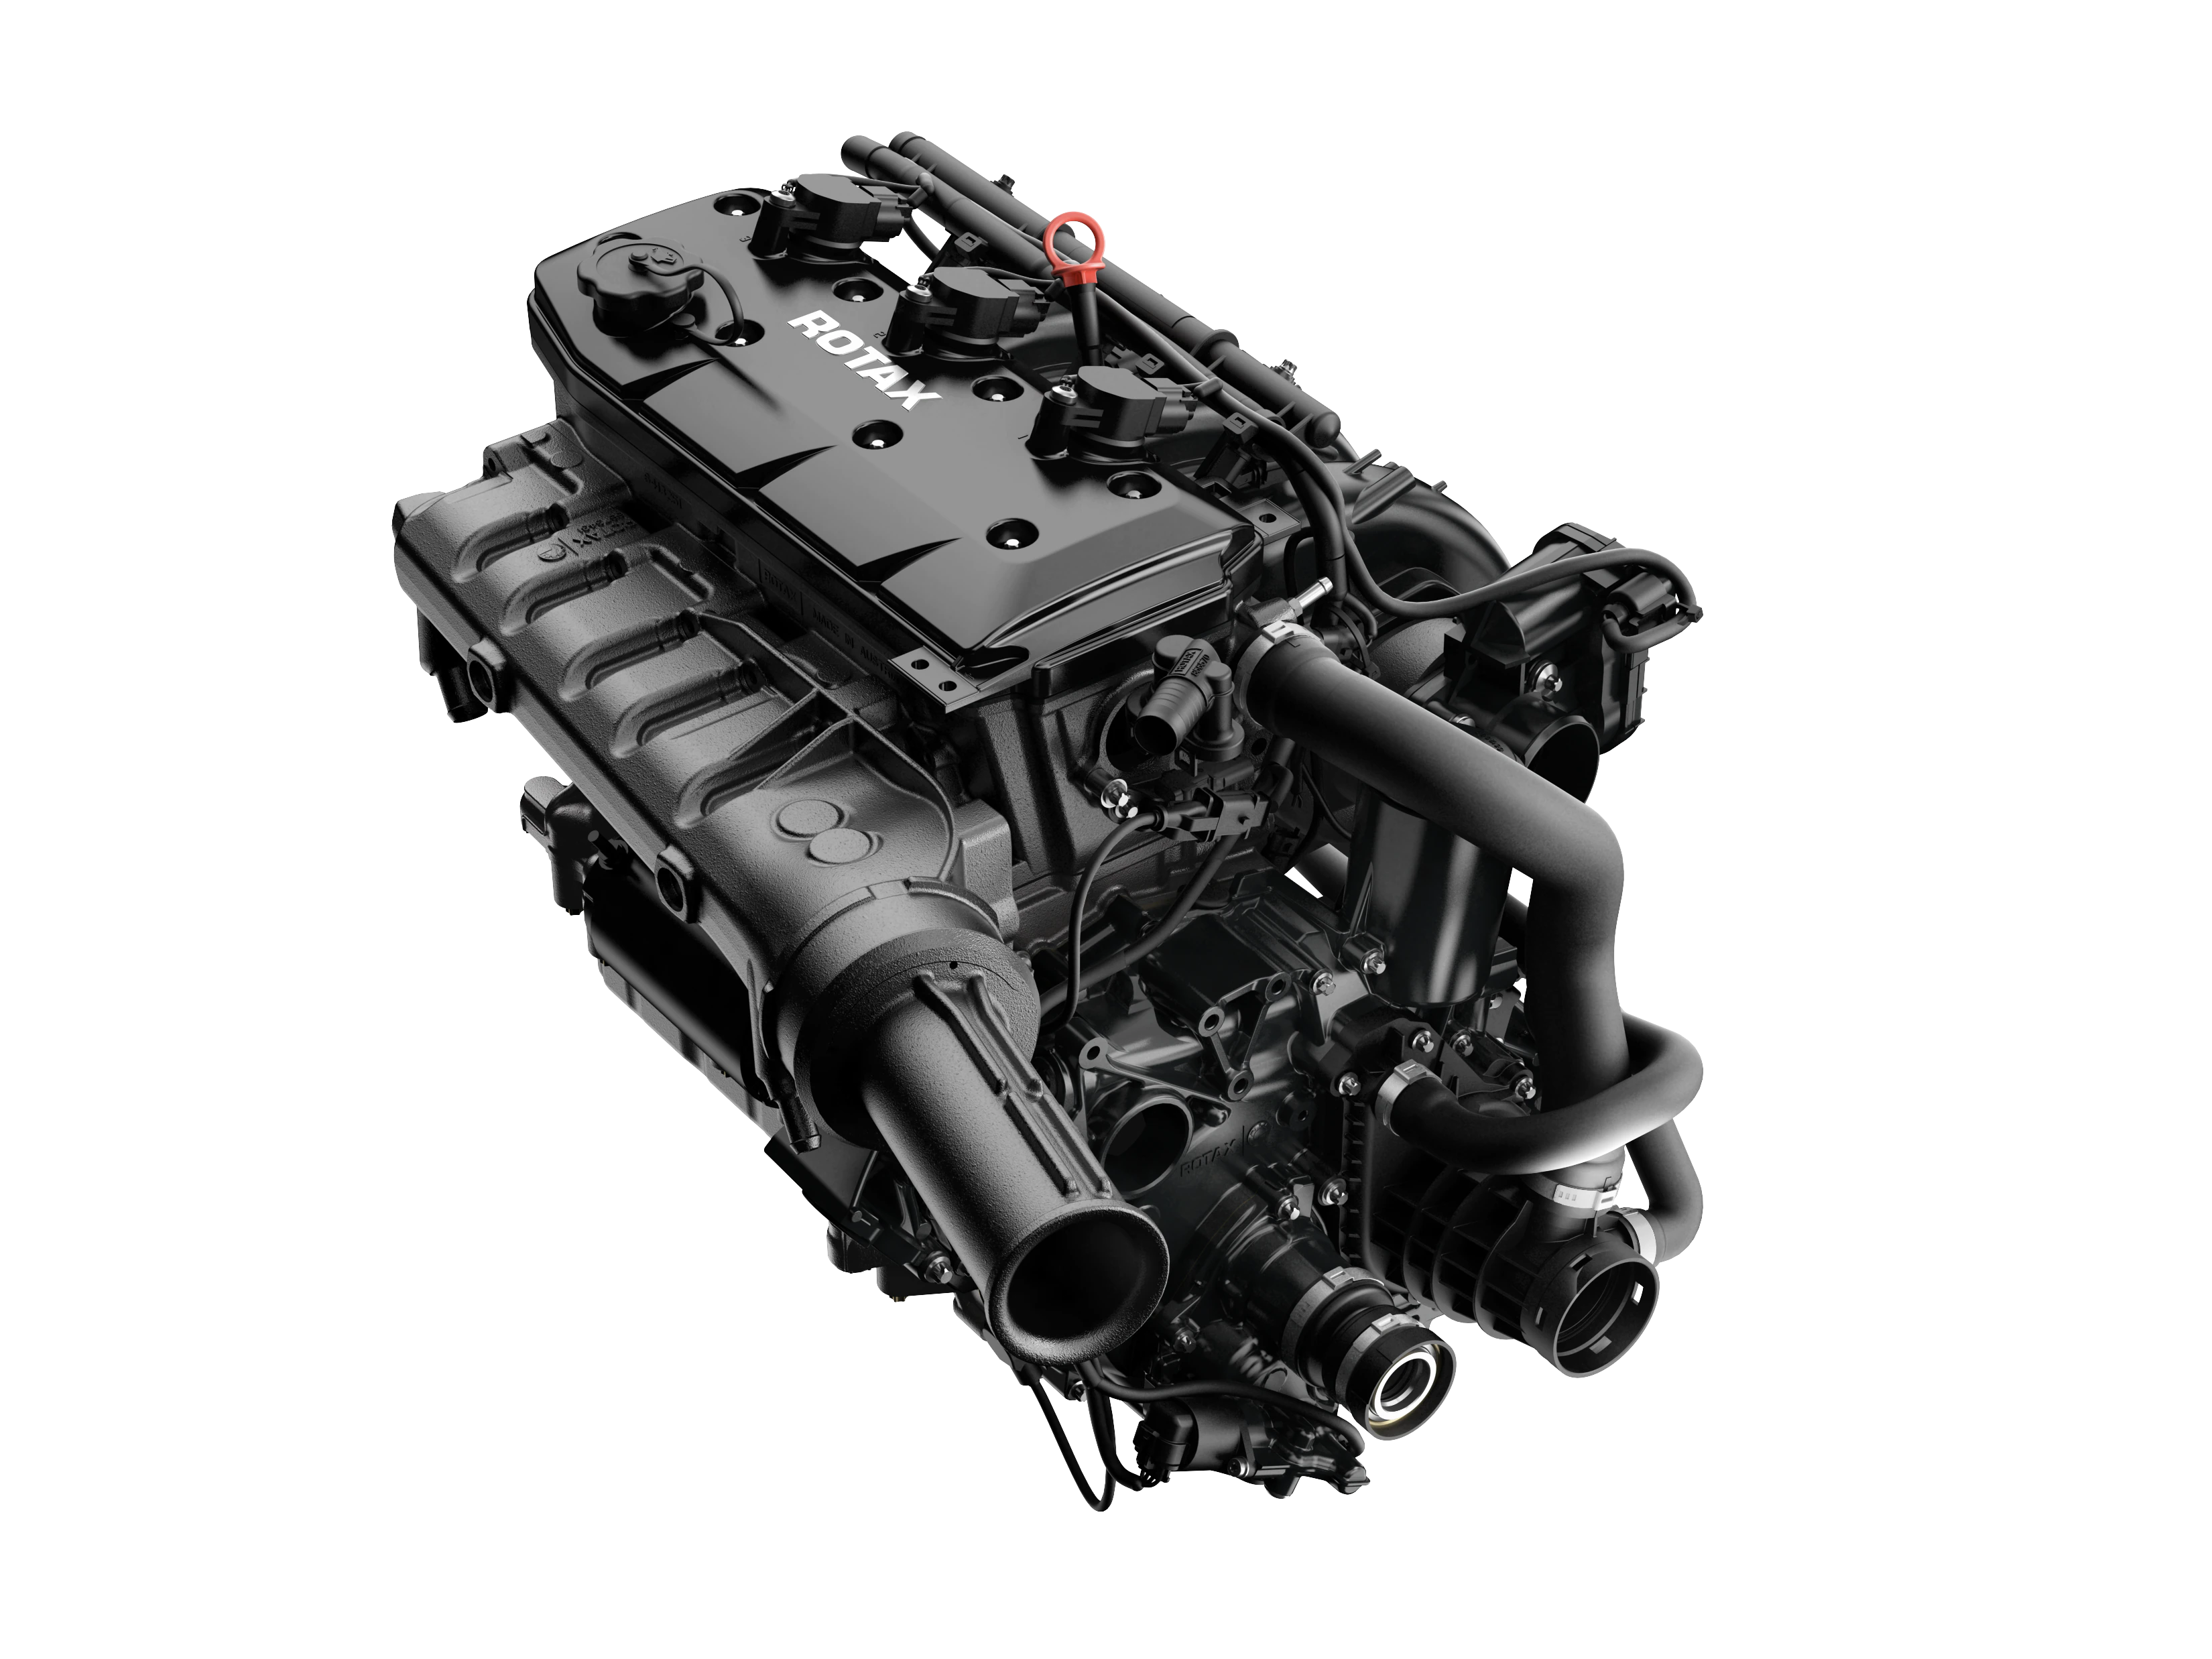 Rotax 1630 ACE - 170 HP motor